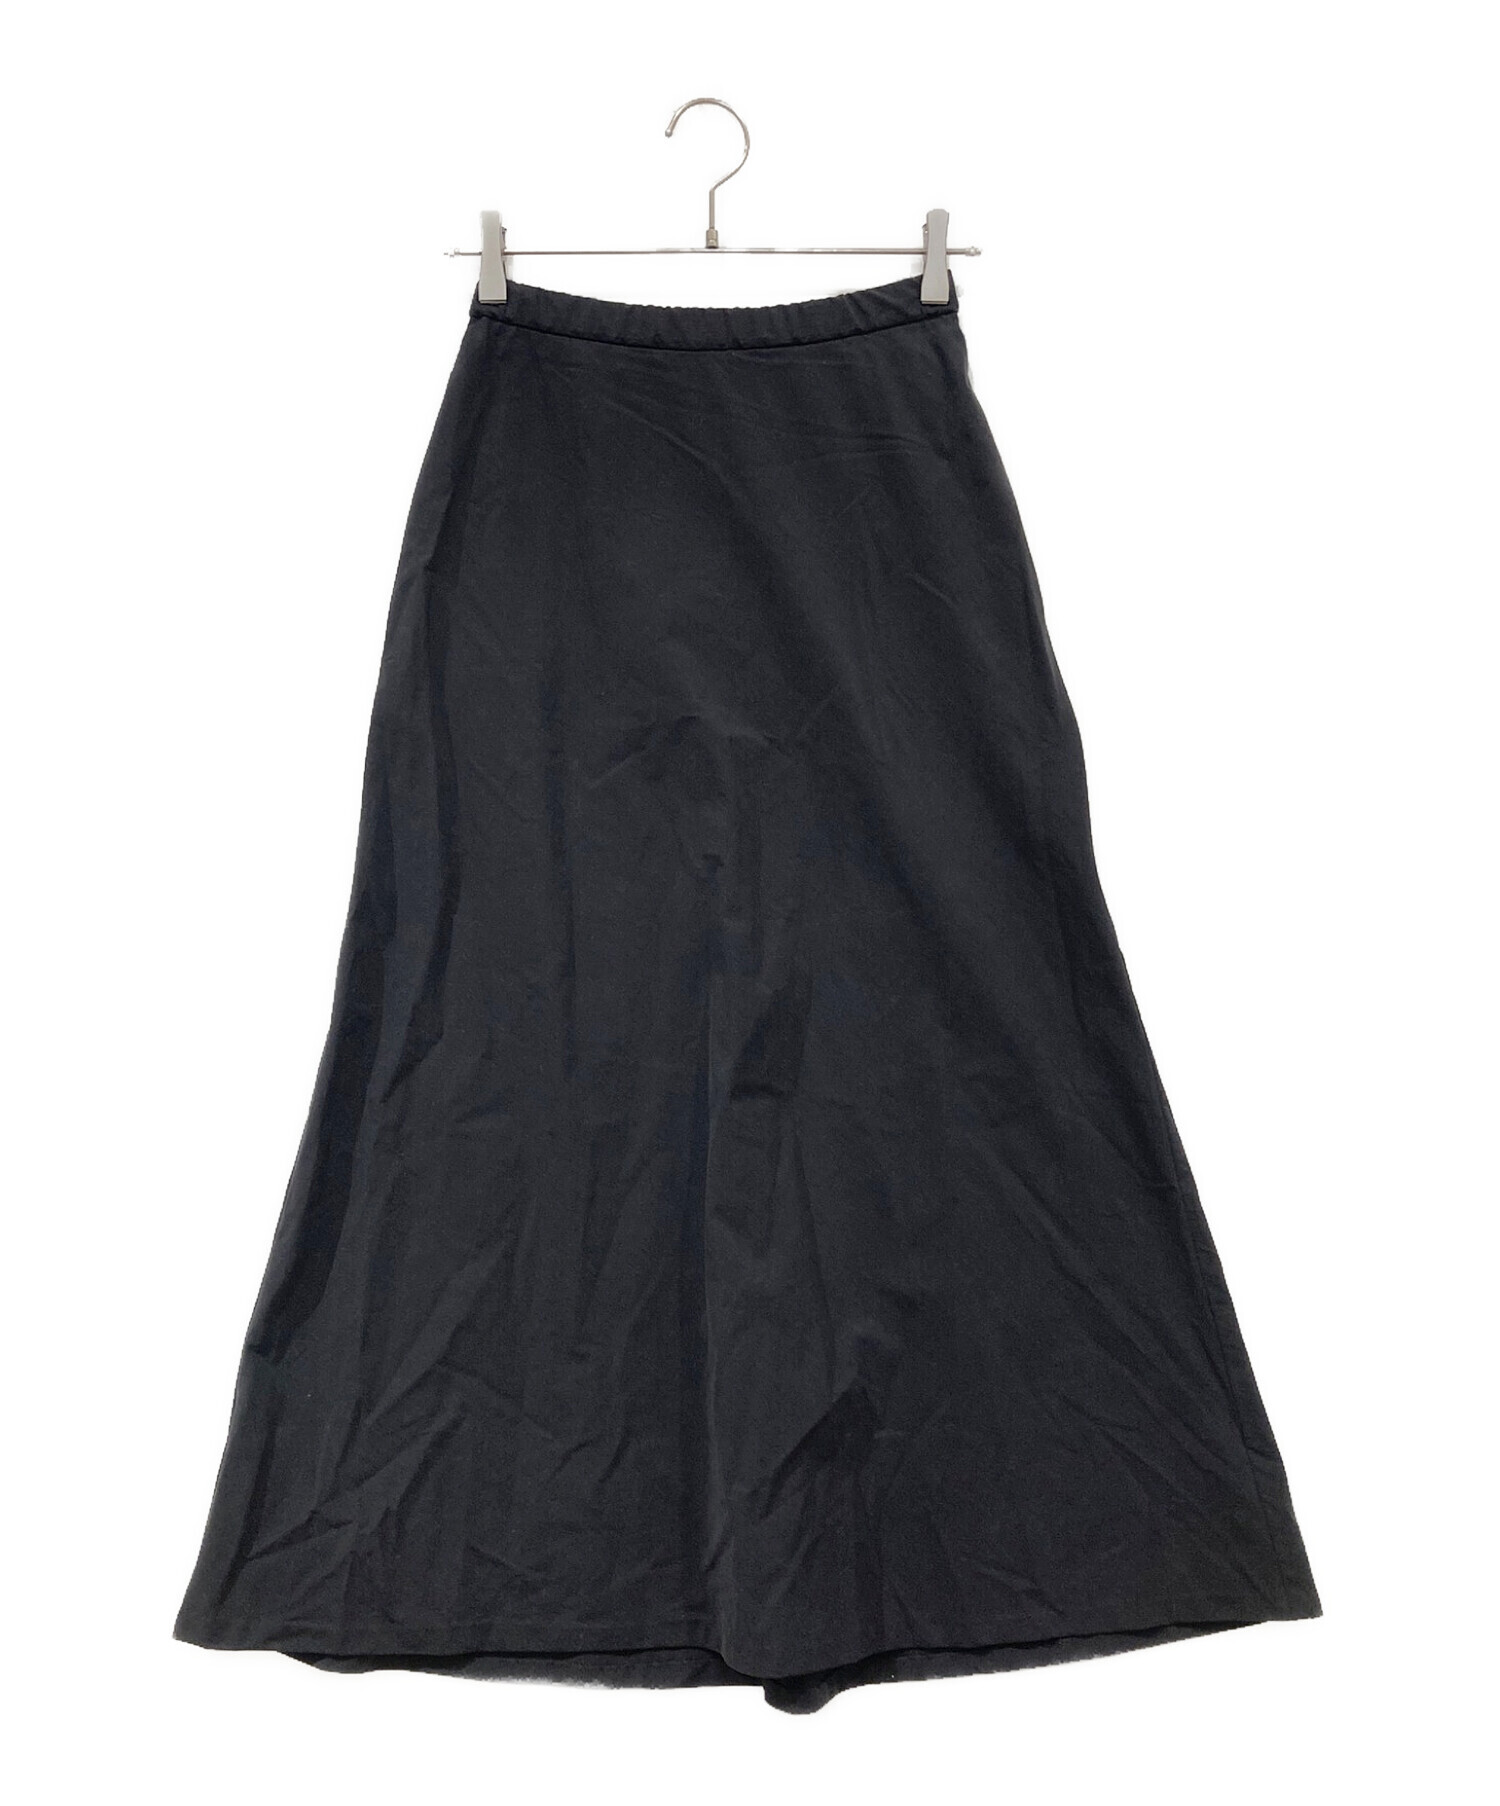 FRAMeWORK (フレームワーク) バイアスフレアスカート ブラック サイズ:36